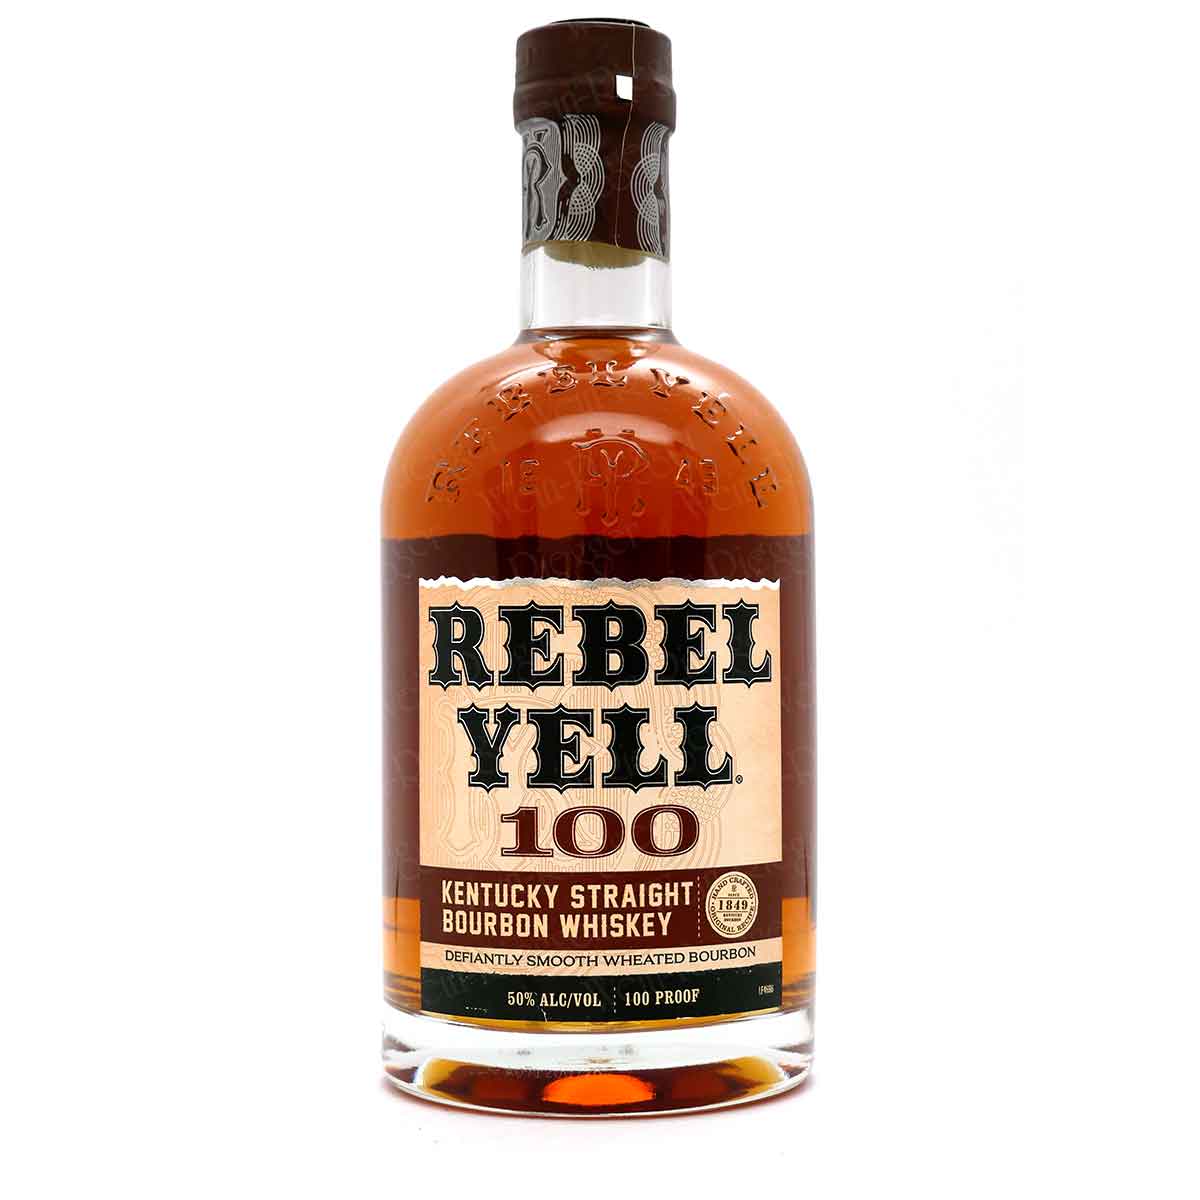 Rebell Yell 100 proof | Kentucky Straight Bourbon Whiskey